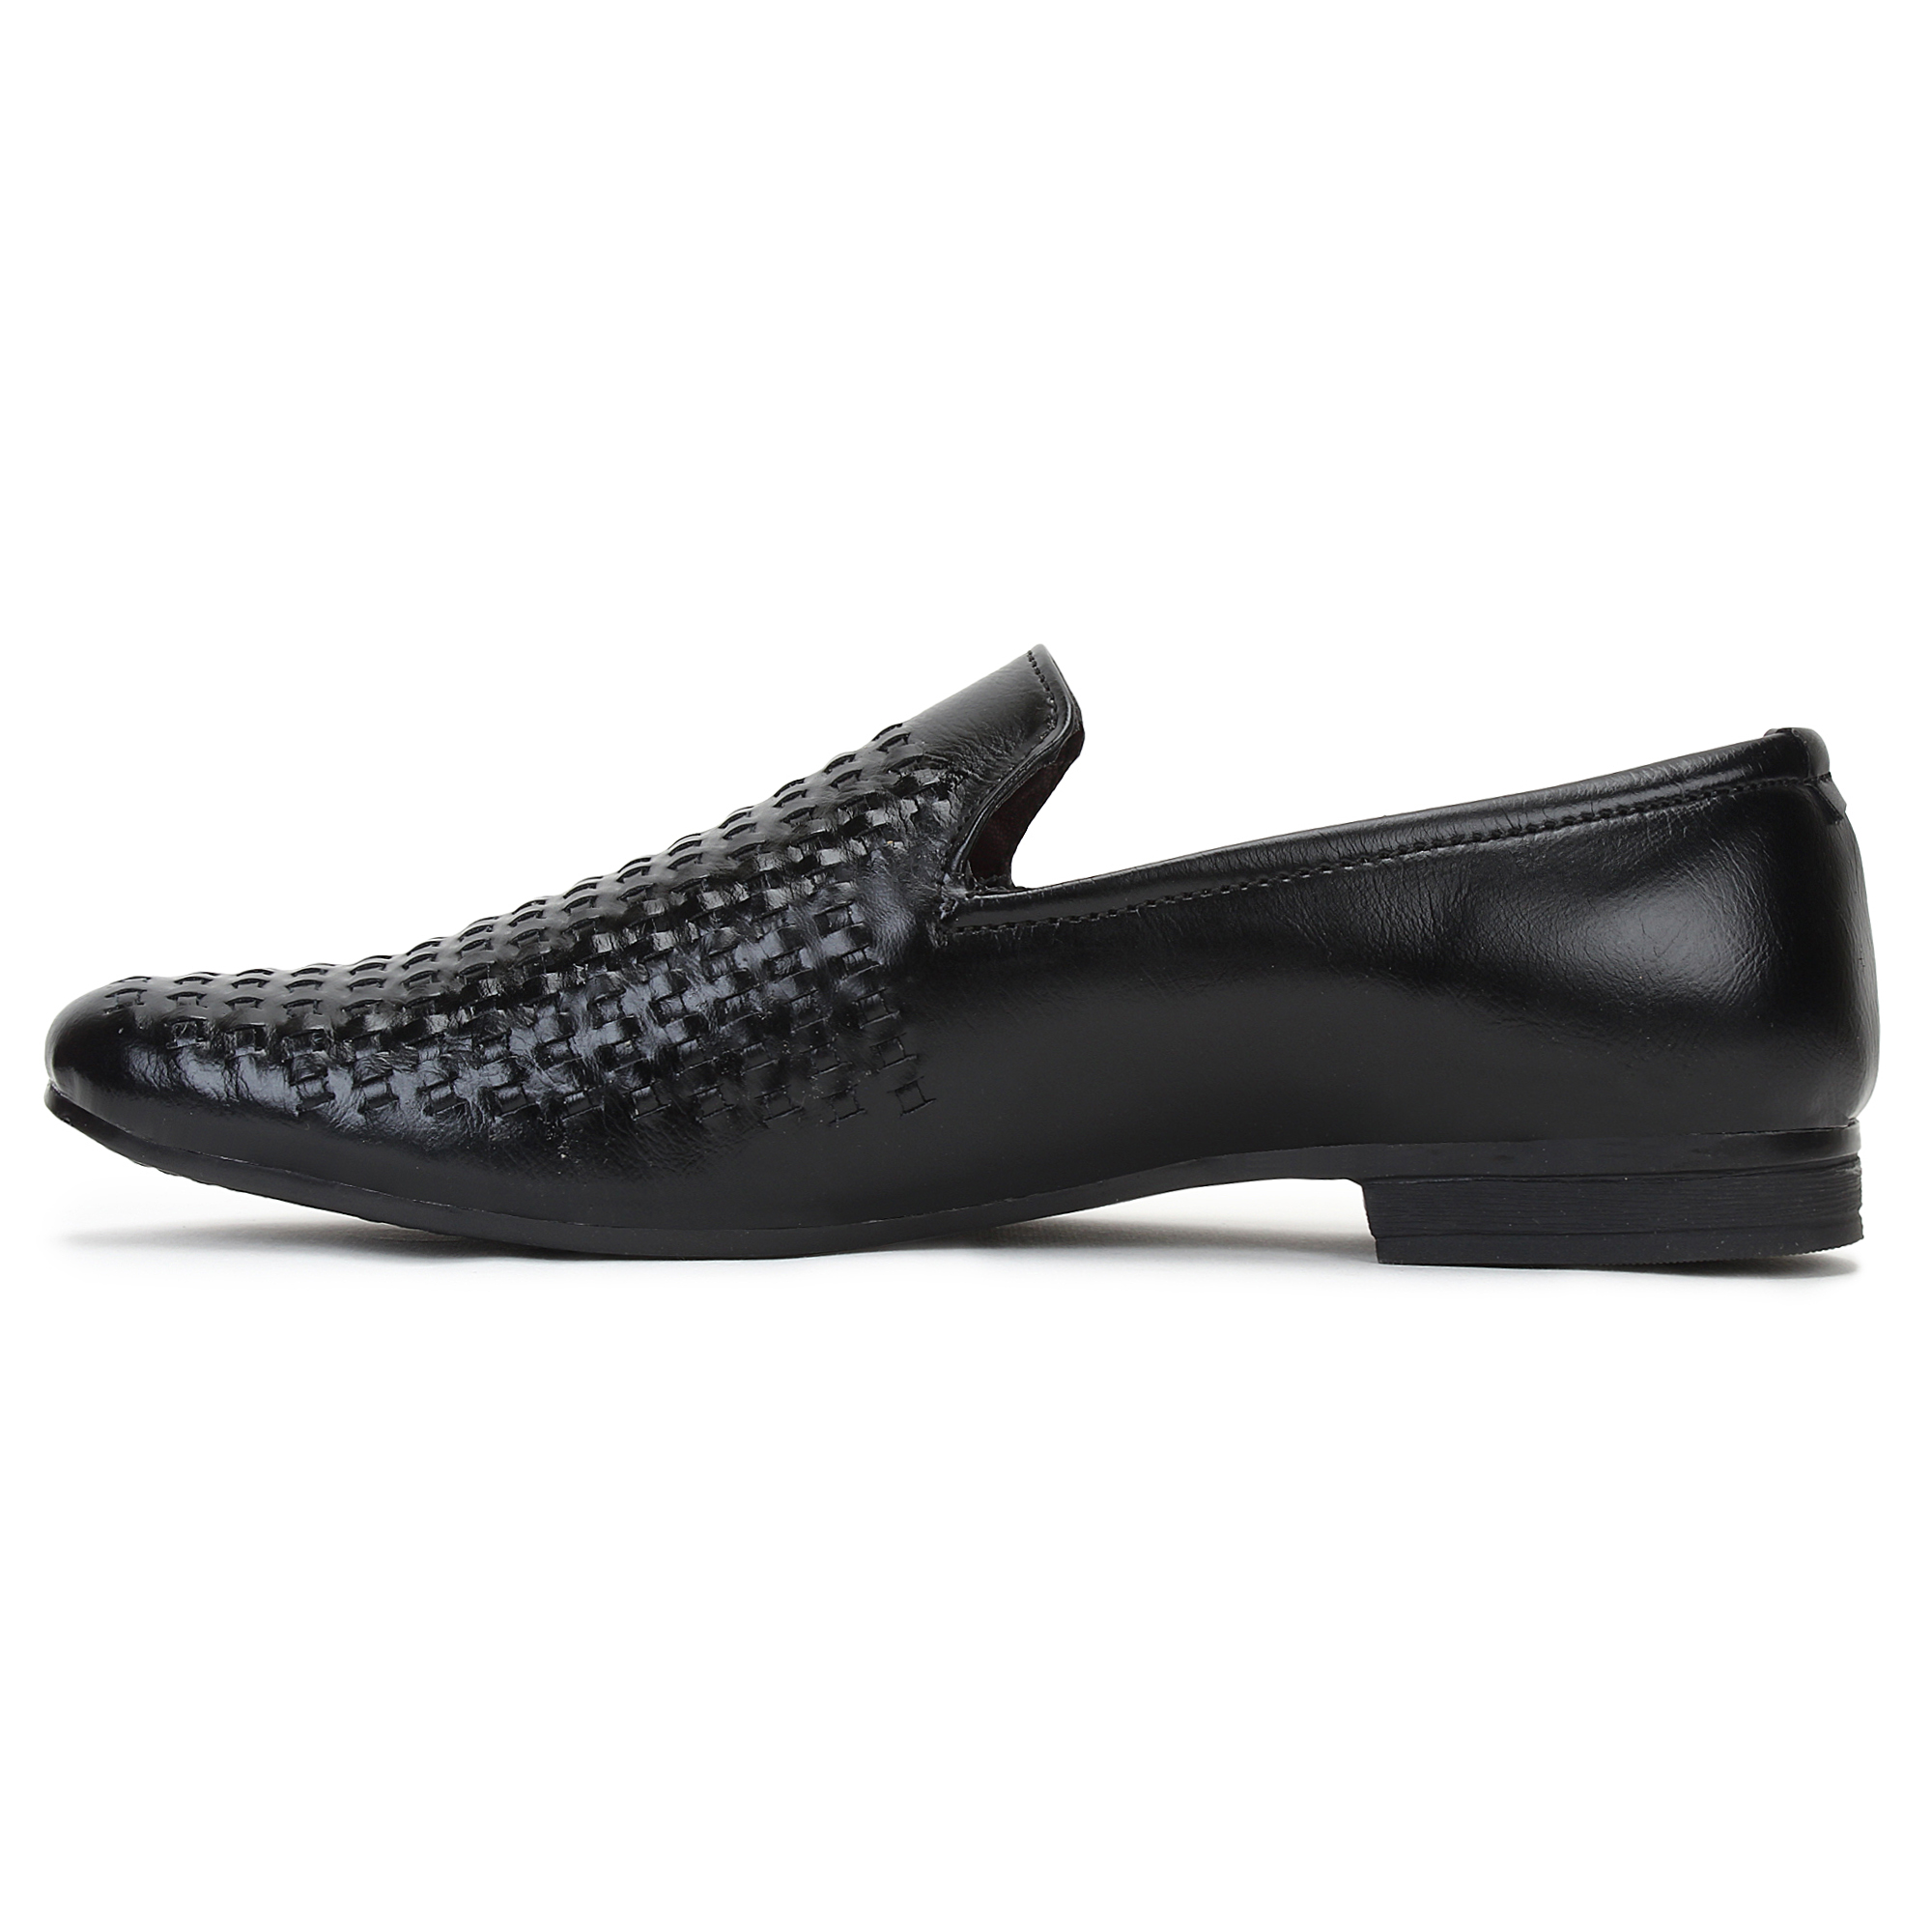 Buy BUWCH Formal Shoe For Men Online @ ₹1499 from ShopClues